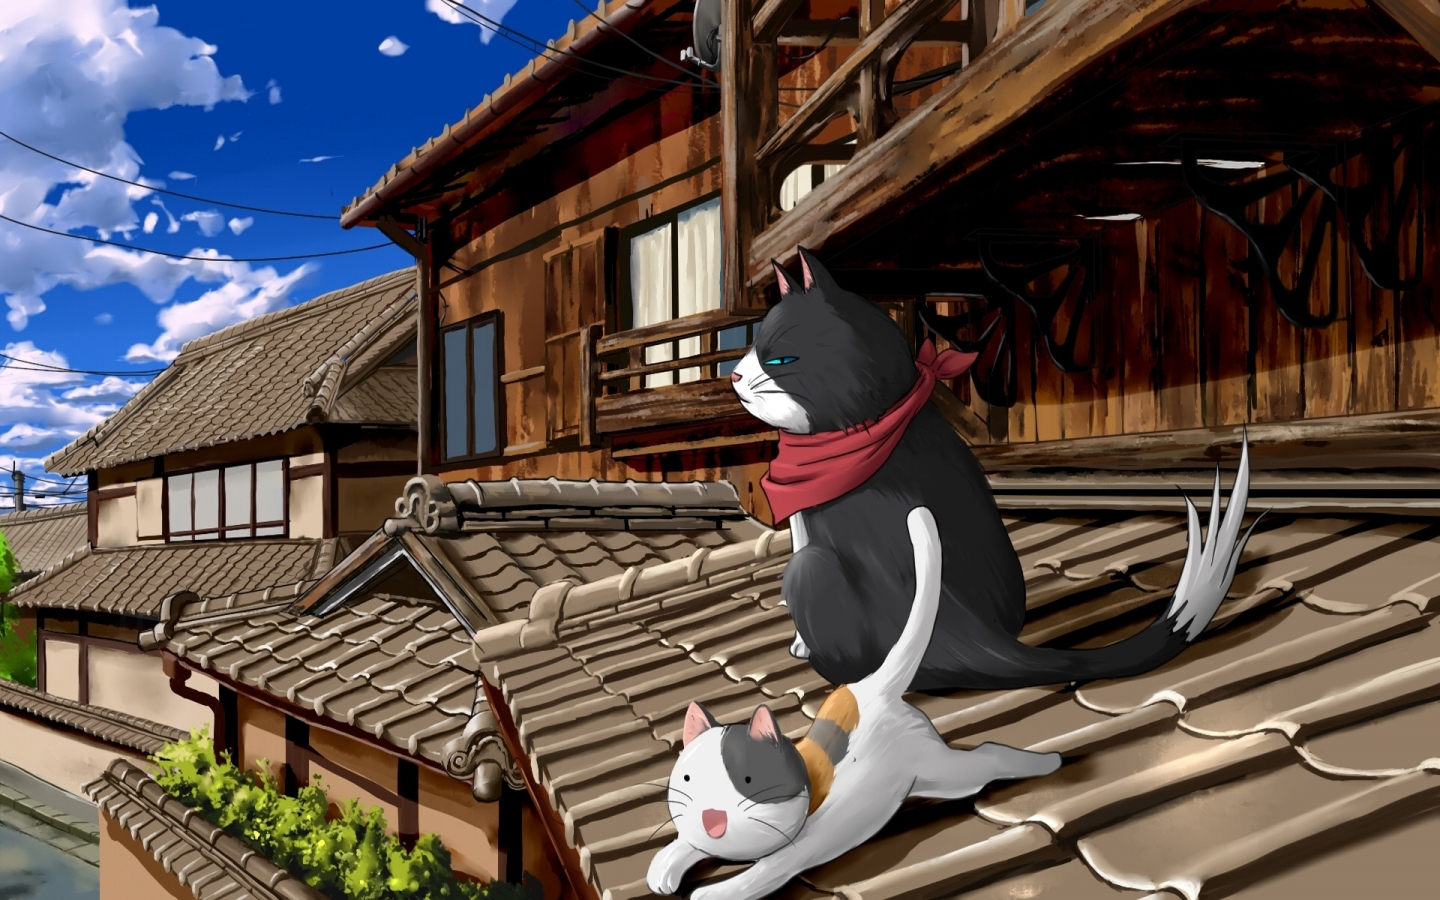 Nyan Koi Anime Series for 1440 x 900 widescreen resolution